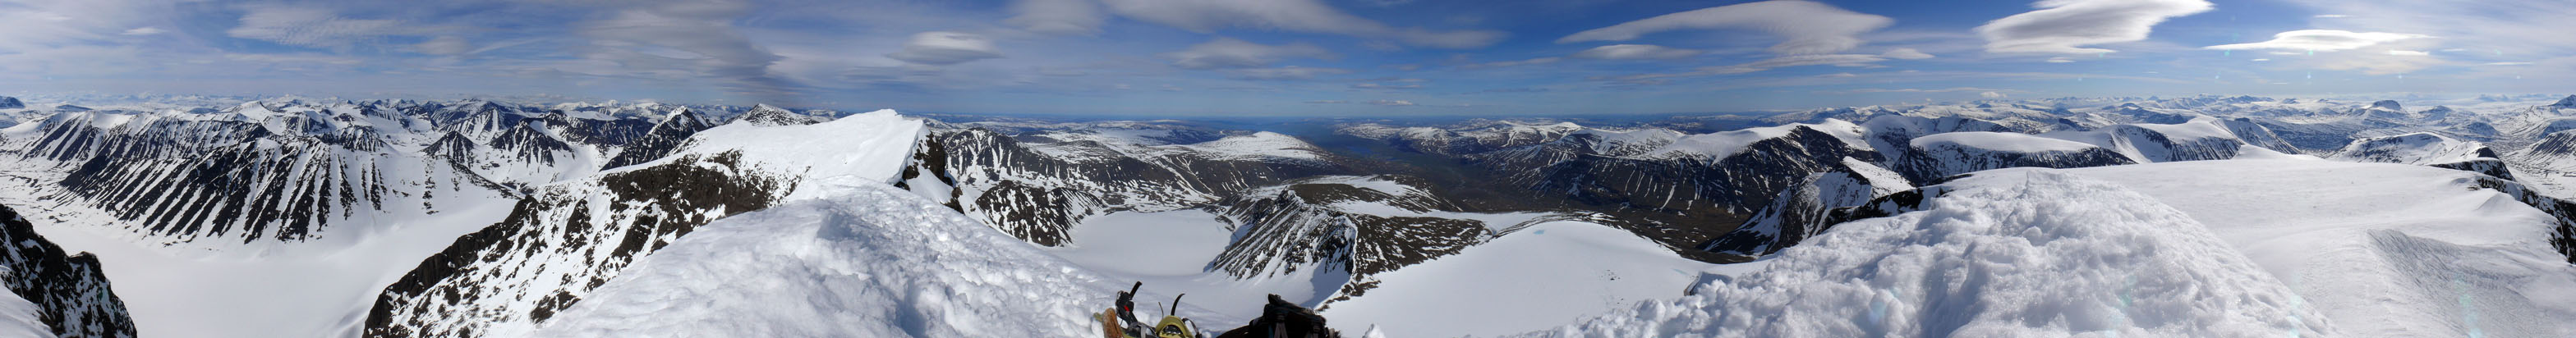 Panorama-Blick vom Gipfel des Berges, Juni 2007